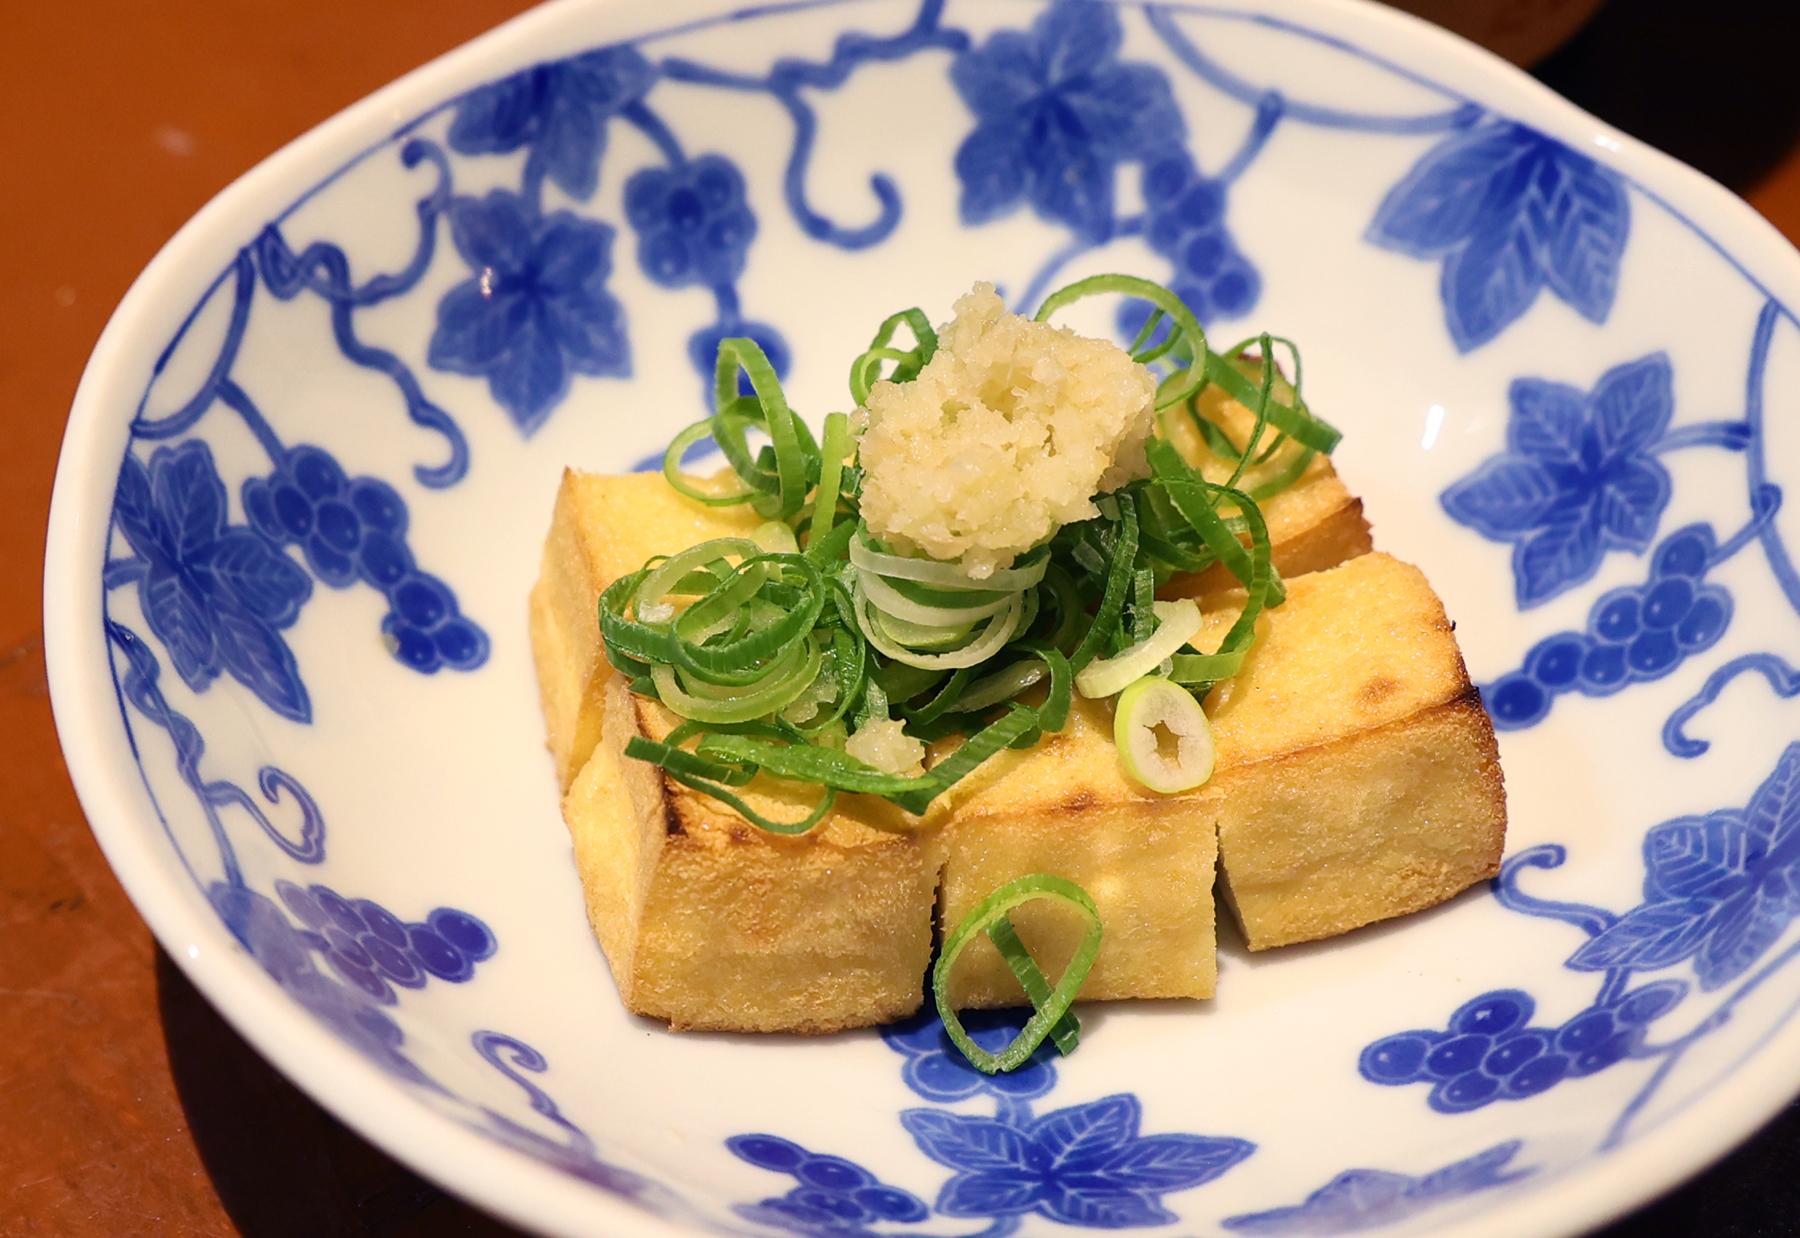 The snack menu at Koba Saketen boasts over 40 items, rivaling Izakaya bars!-8